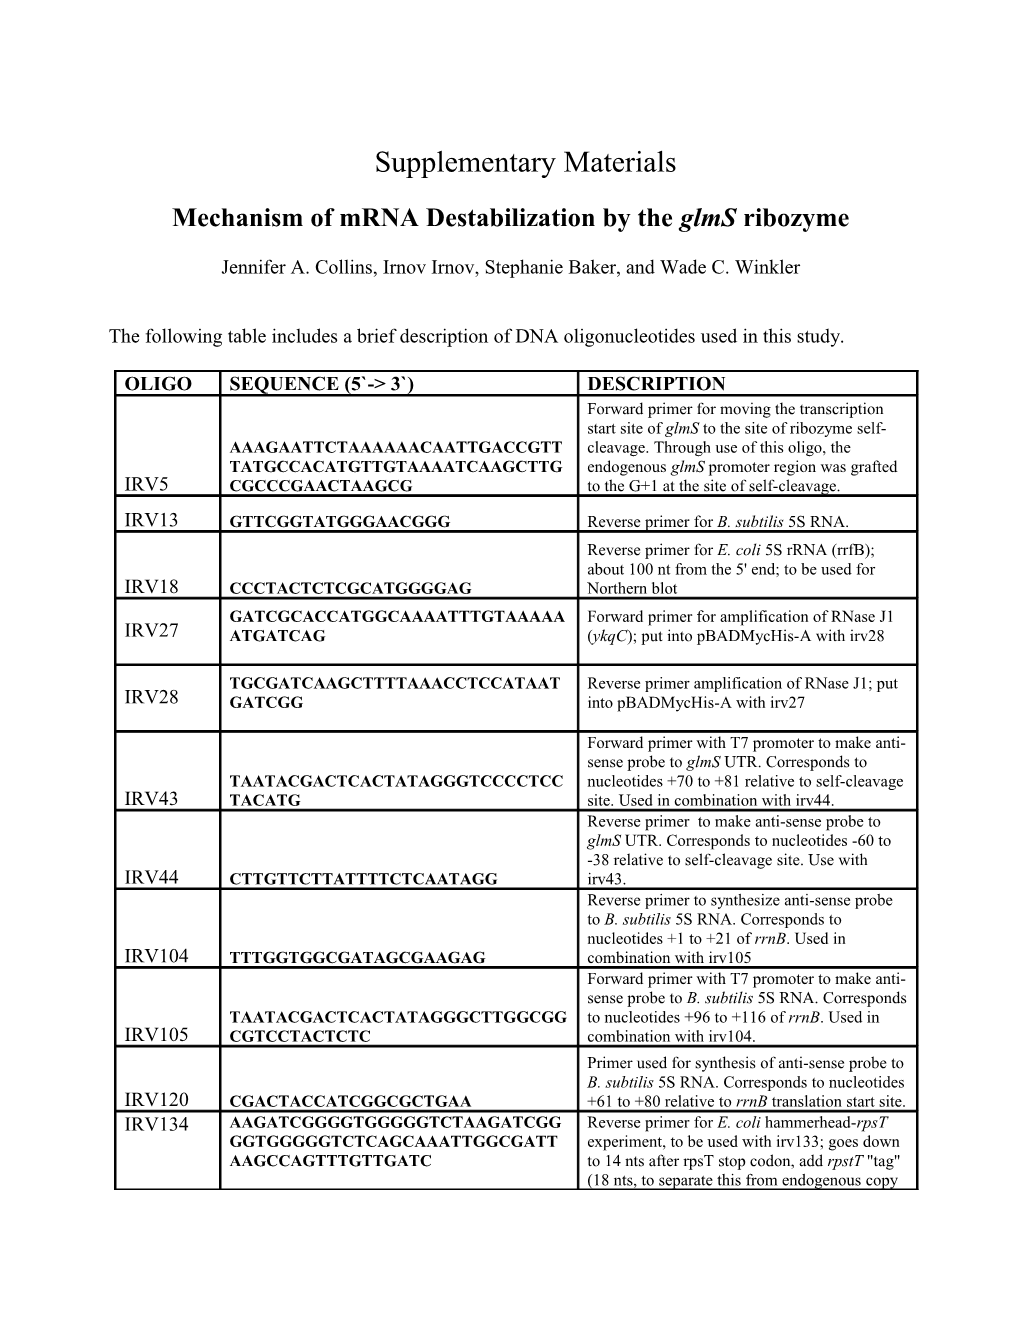 Mechanism of Mrna Destabilization by the Glms Ribozyme